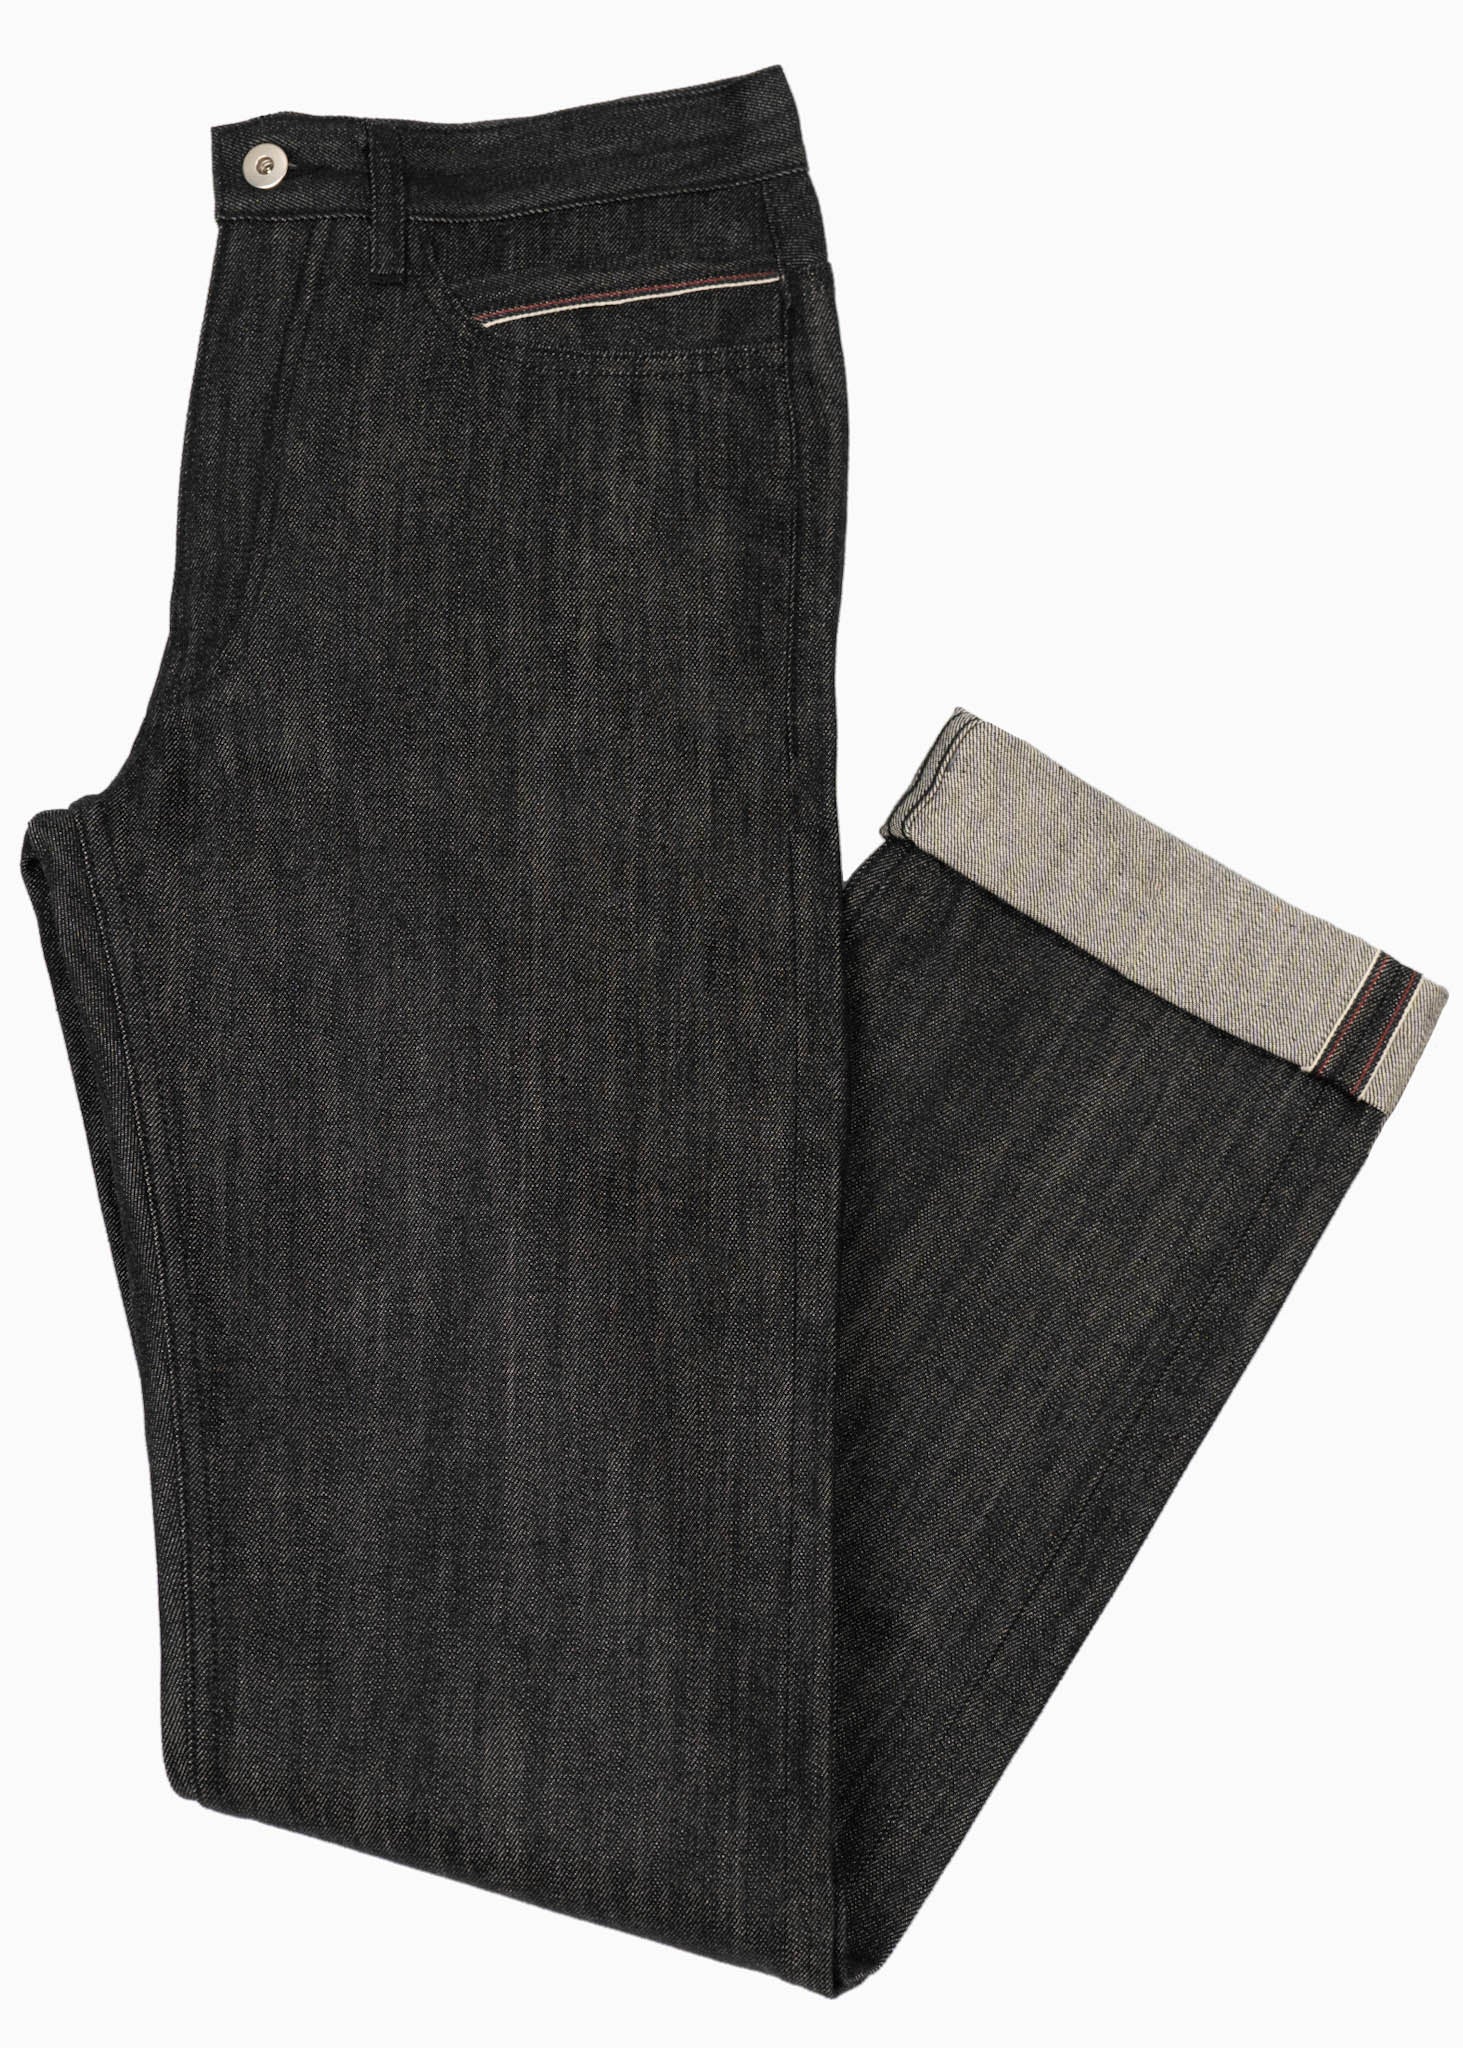 Slim Fit - Black Selvedge Italian Denim Heritage Jeans